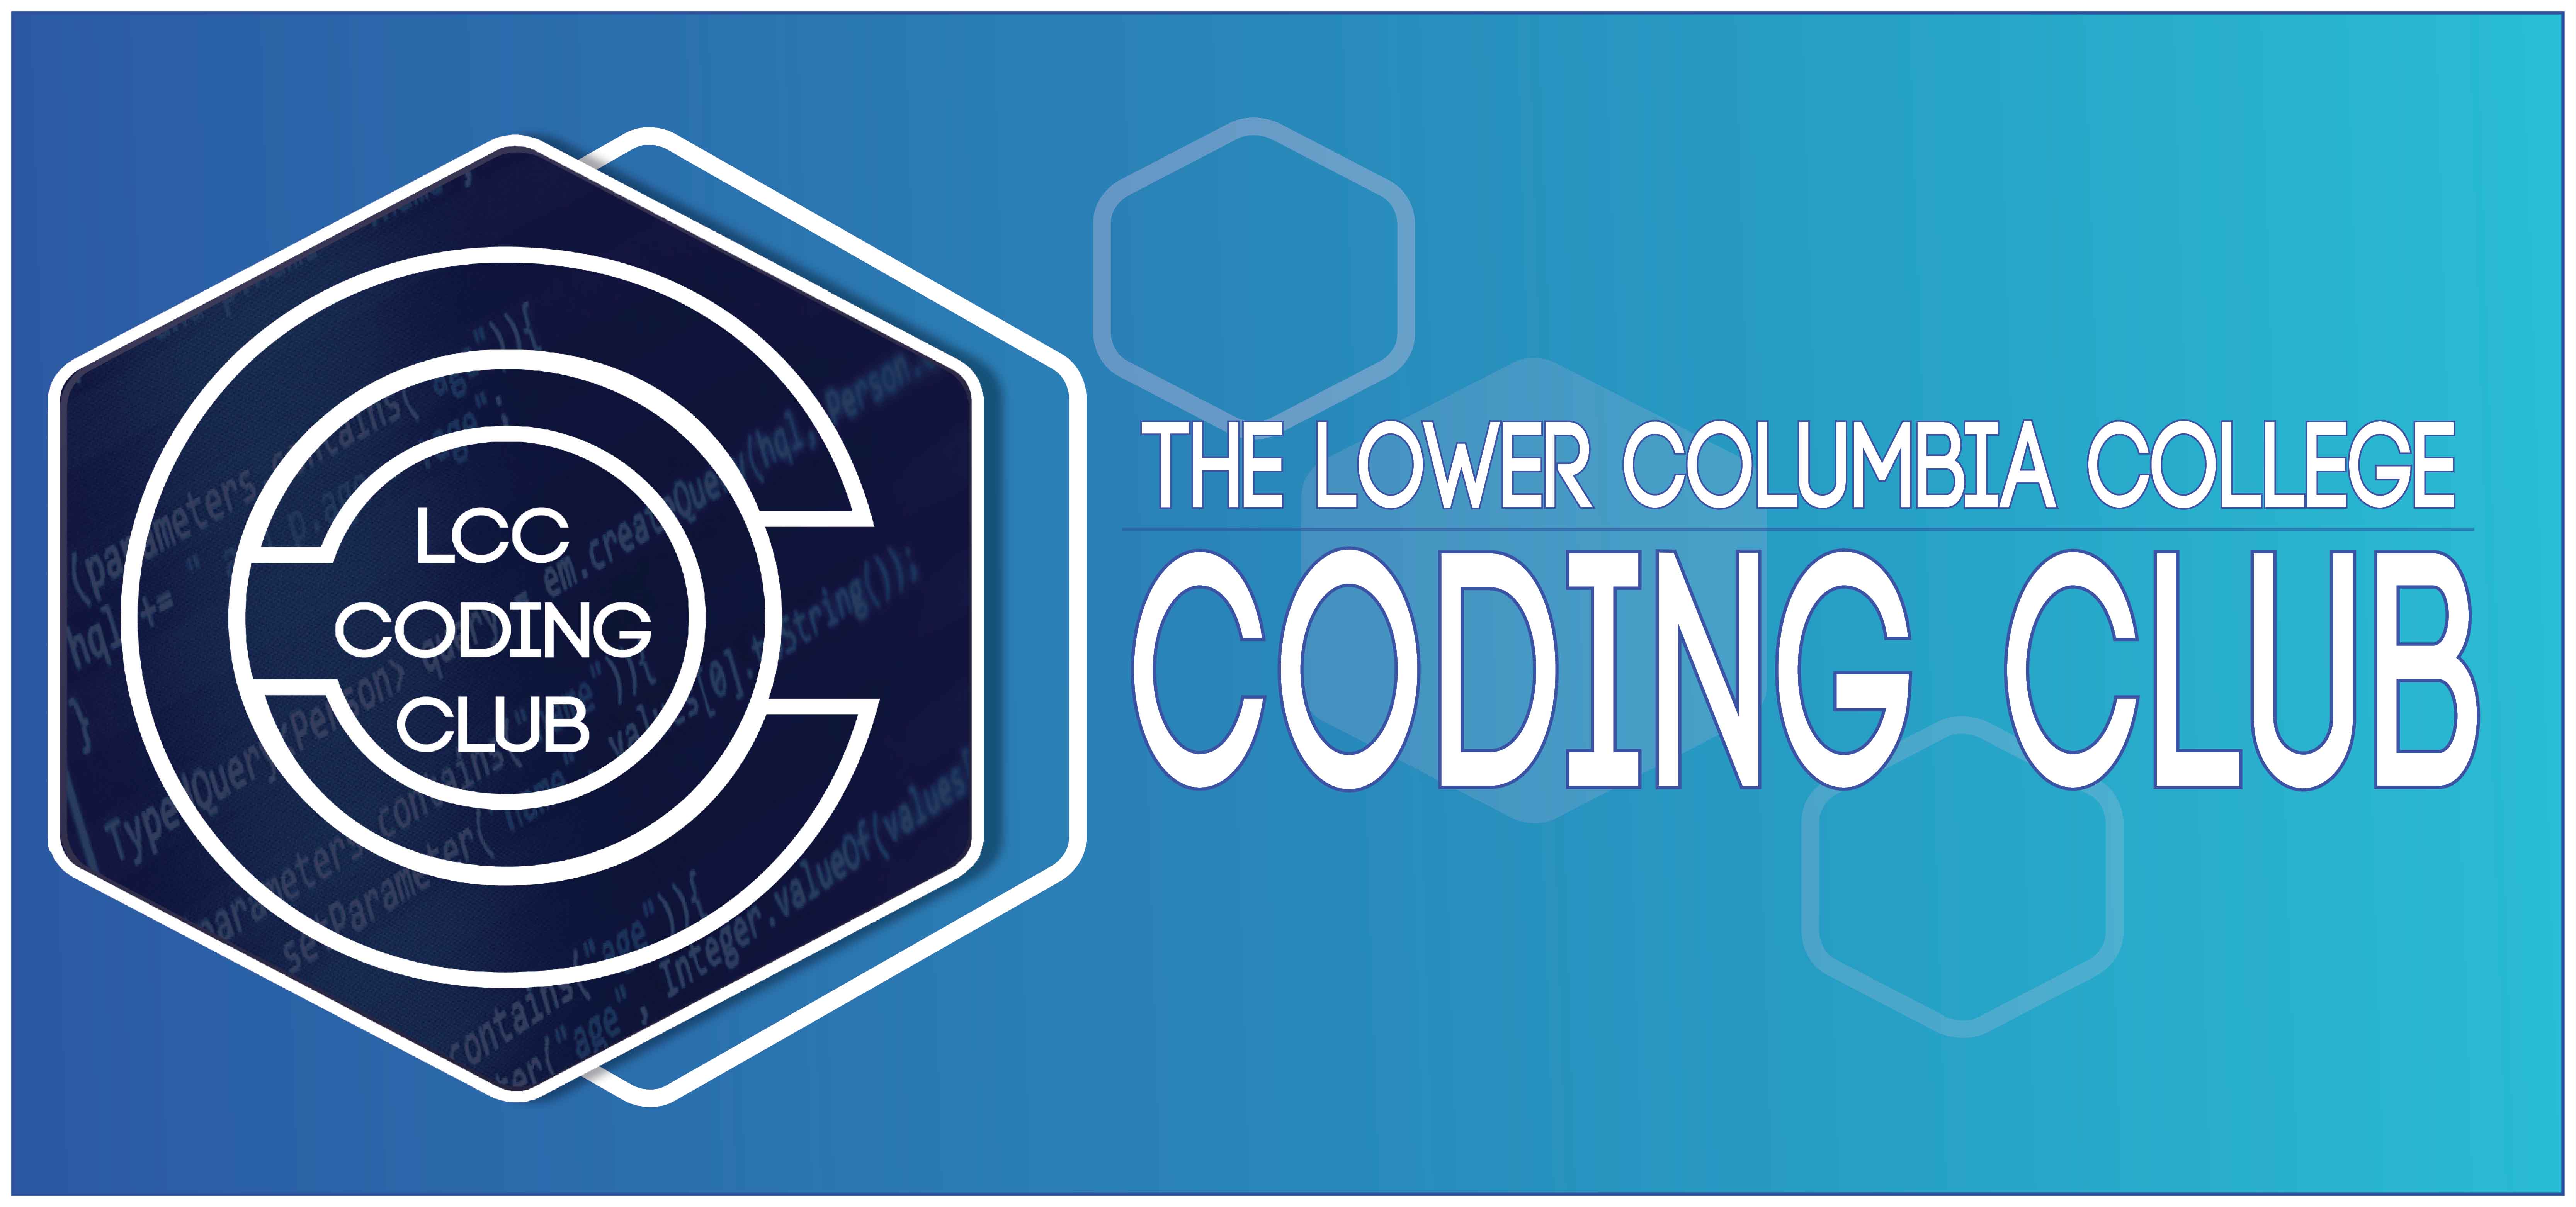 Coding club banner